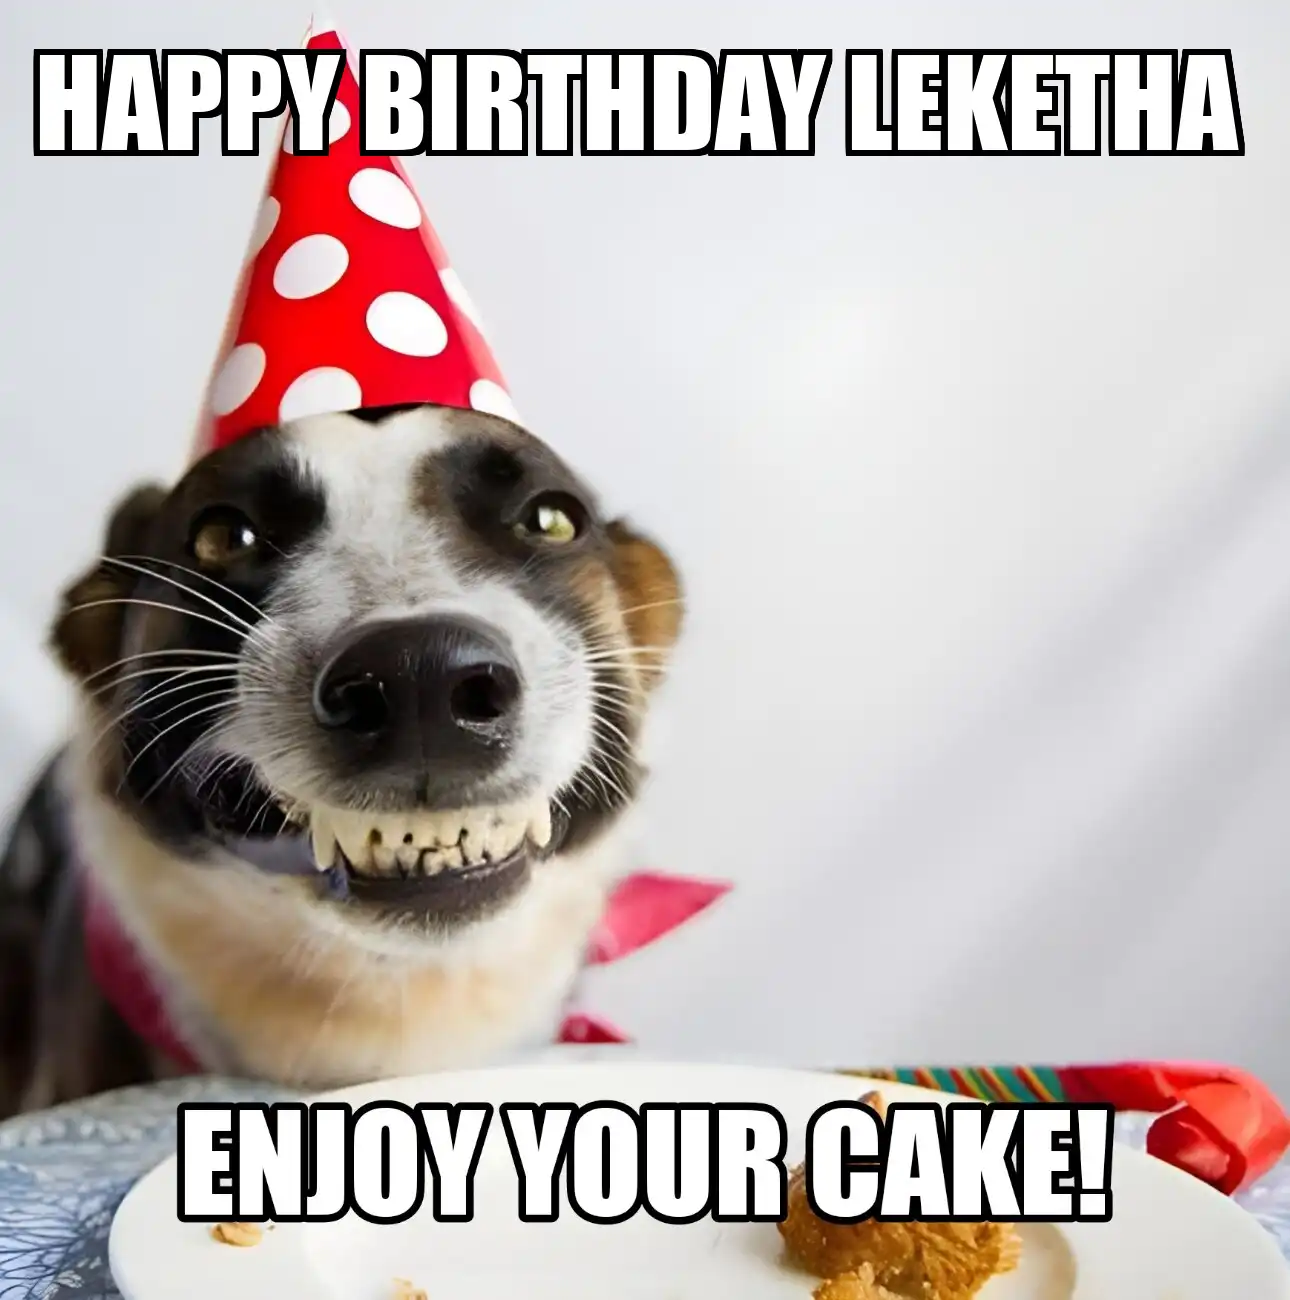 Happy Birthday Leketha Enjoy Your Cake Dog Meme